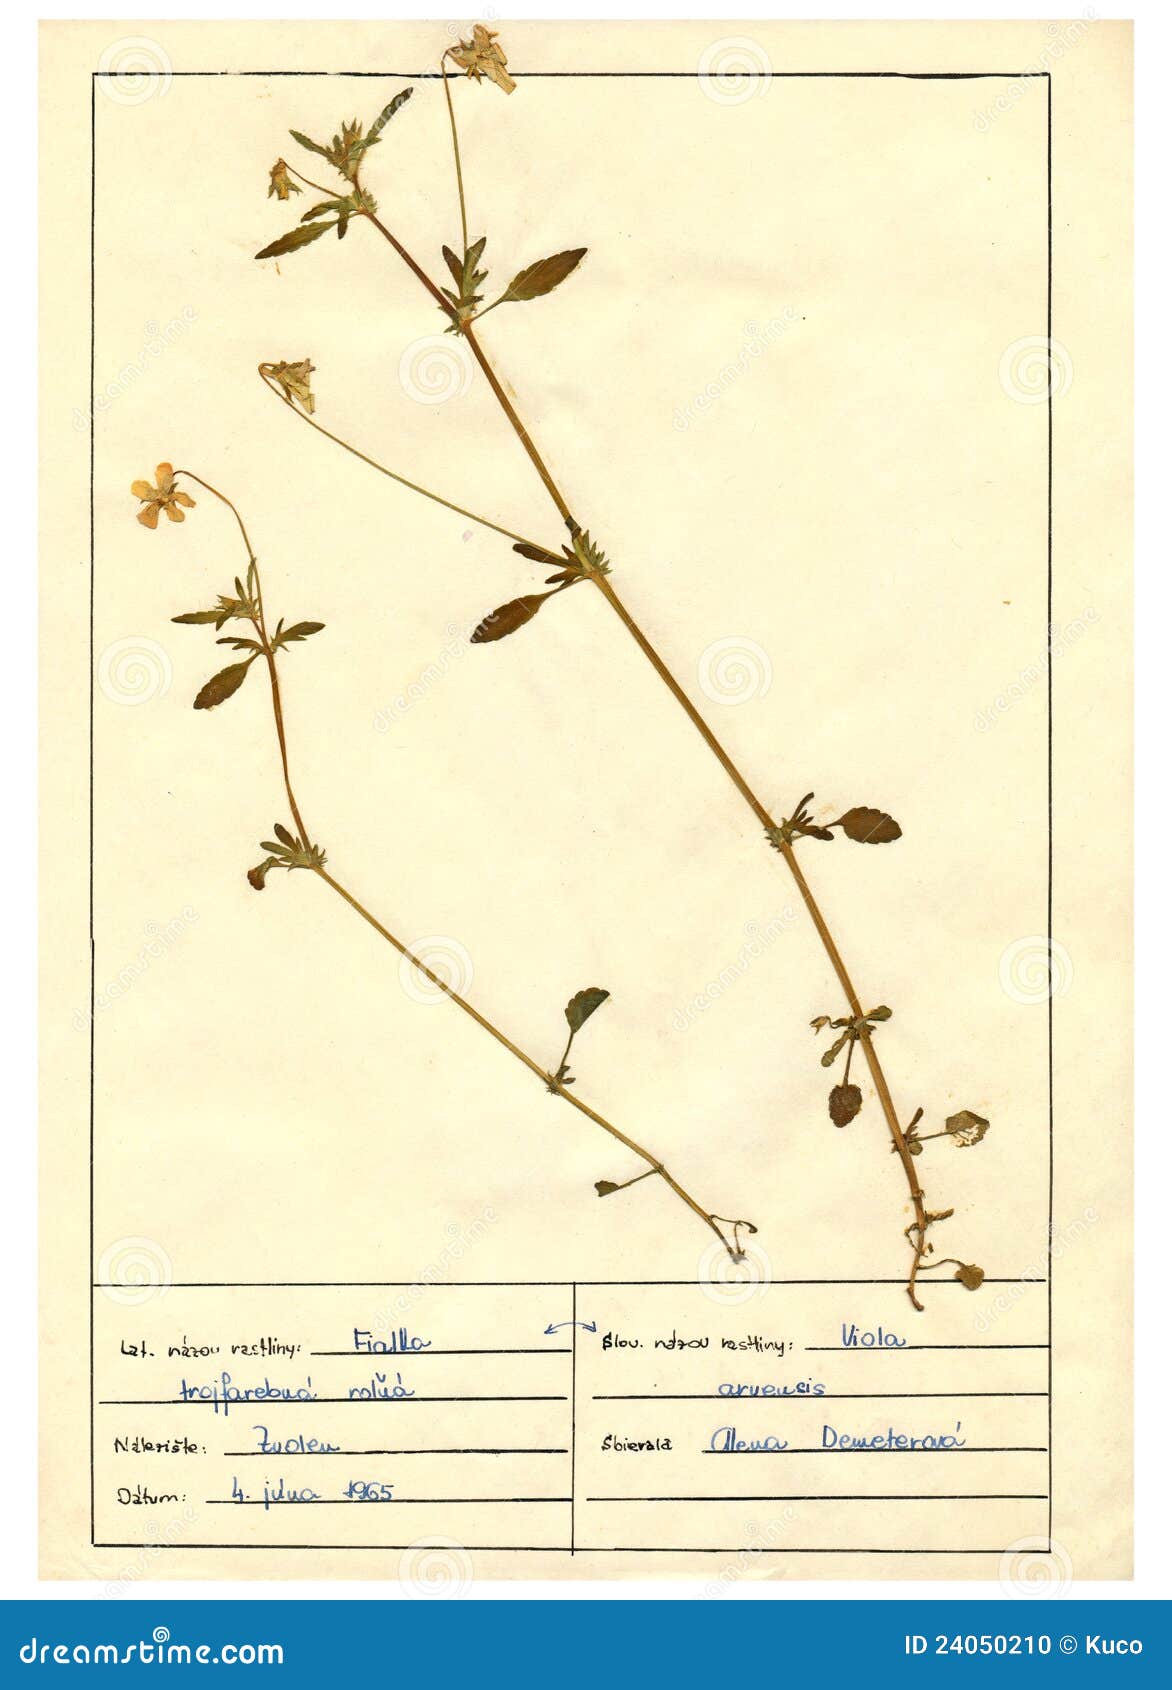 herbarium sheet - 2/30